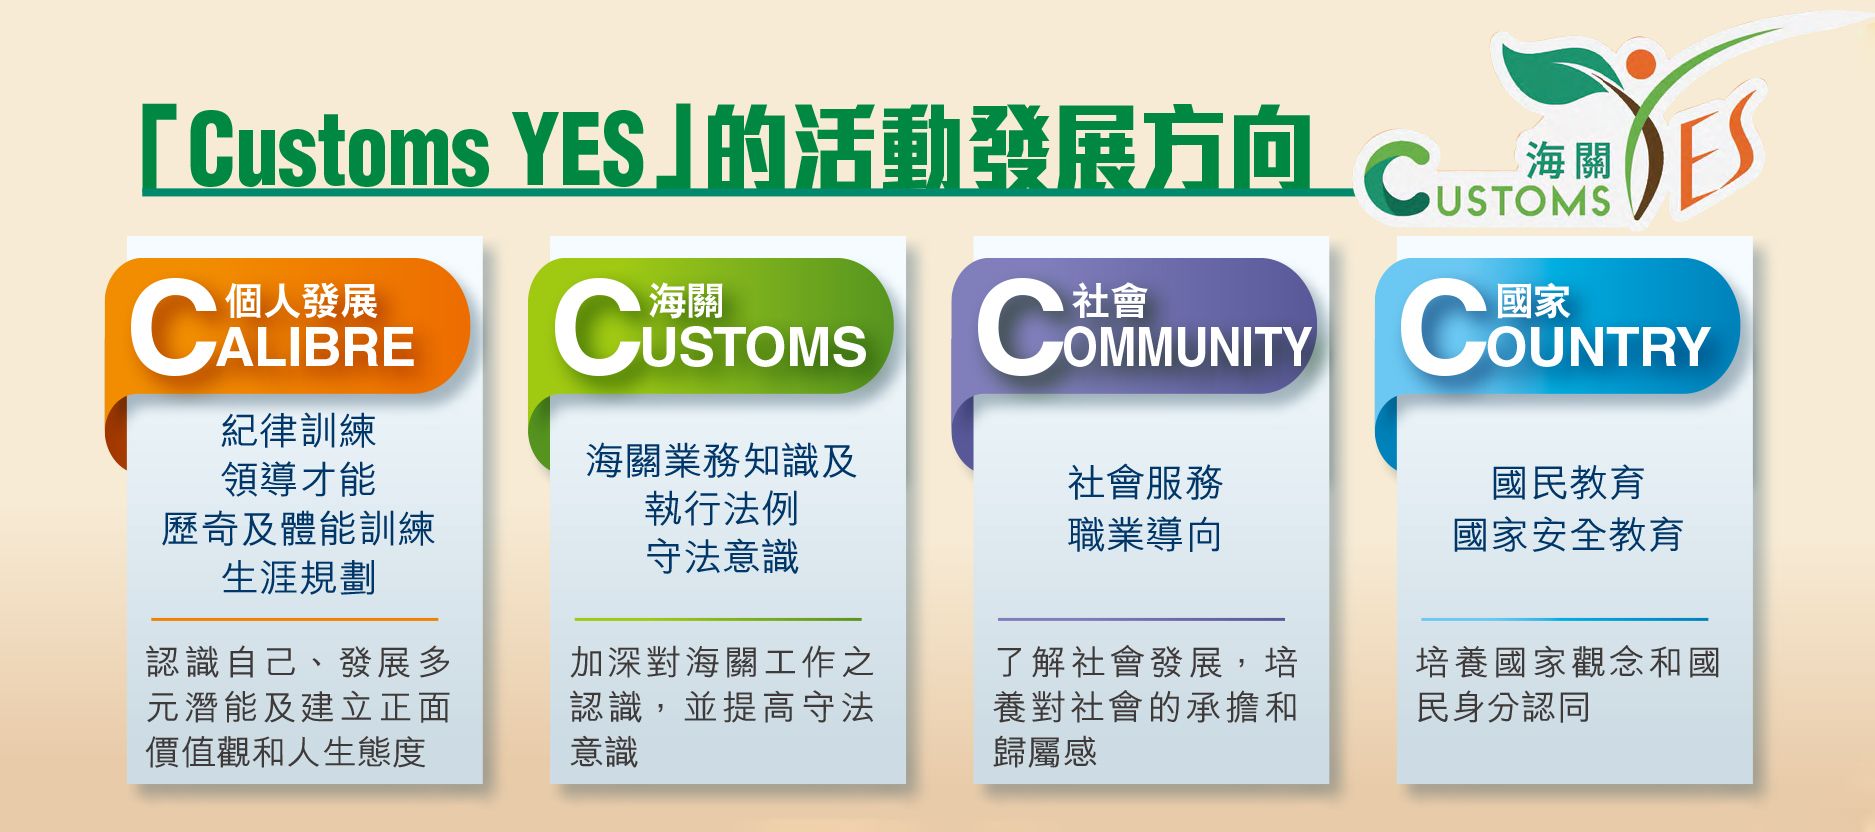 「Customs YES」的活動發展方向